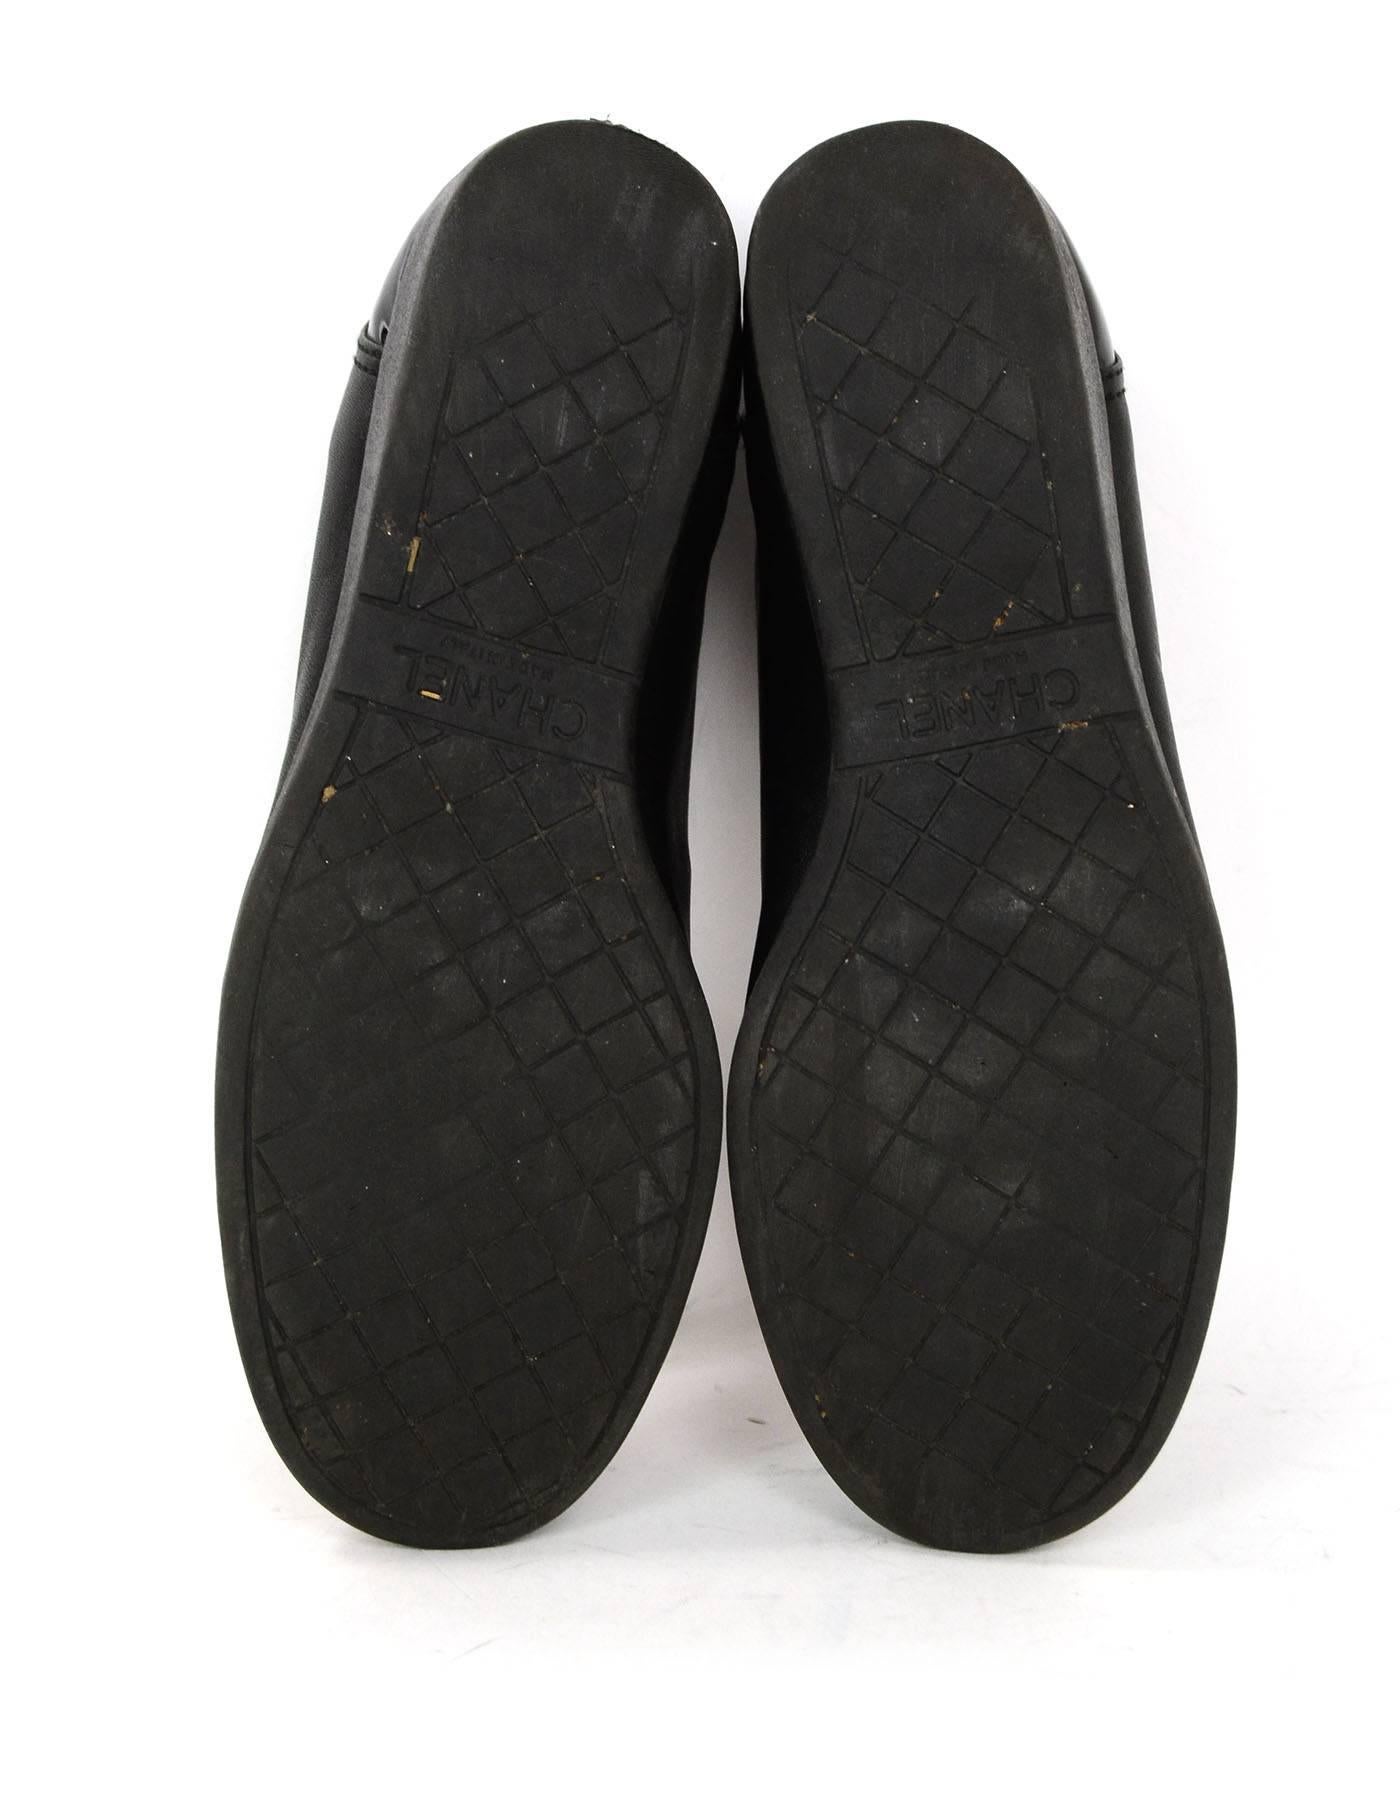 Chanel Black Leather CC Sneakers sz 38 w/DB 2